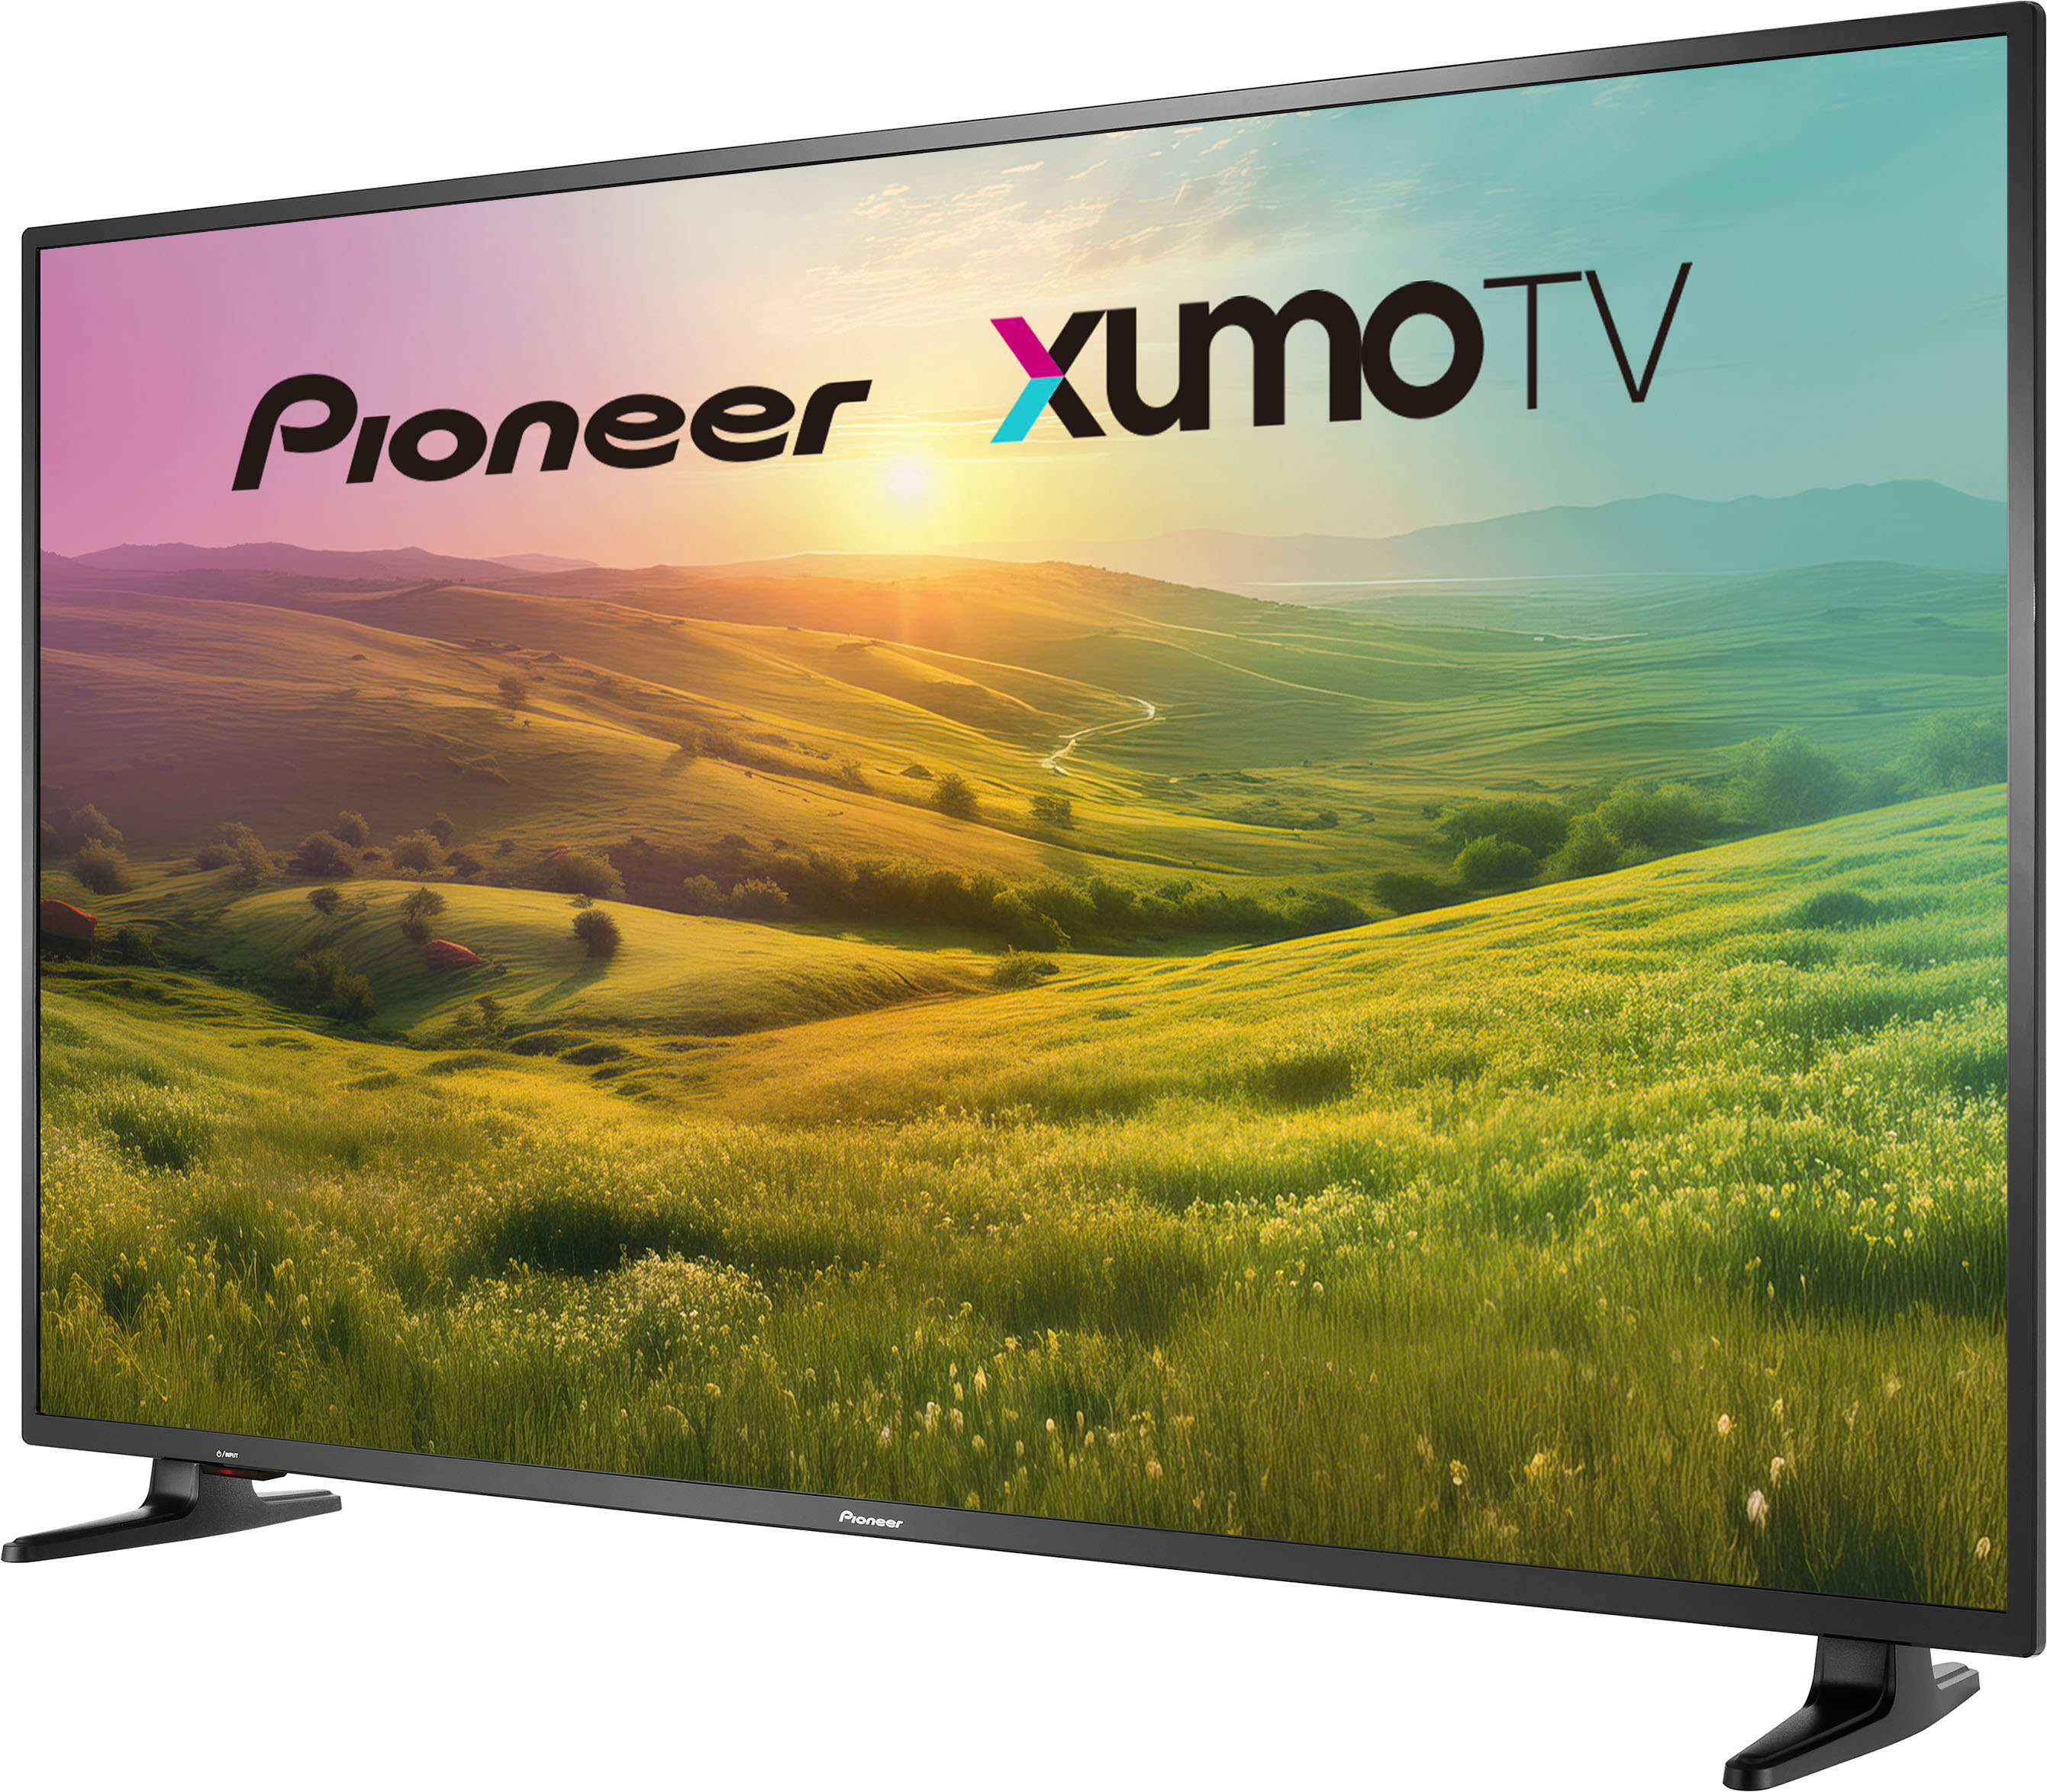 Pioneer 55 Class LED 4K UHD Smart Xumo TV PN55-751-24U - Best Buy